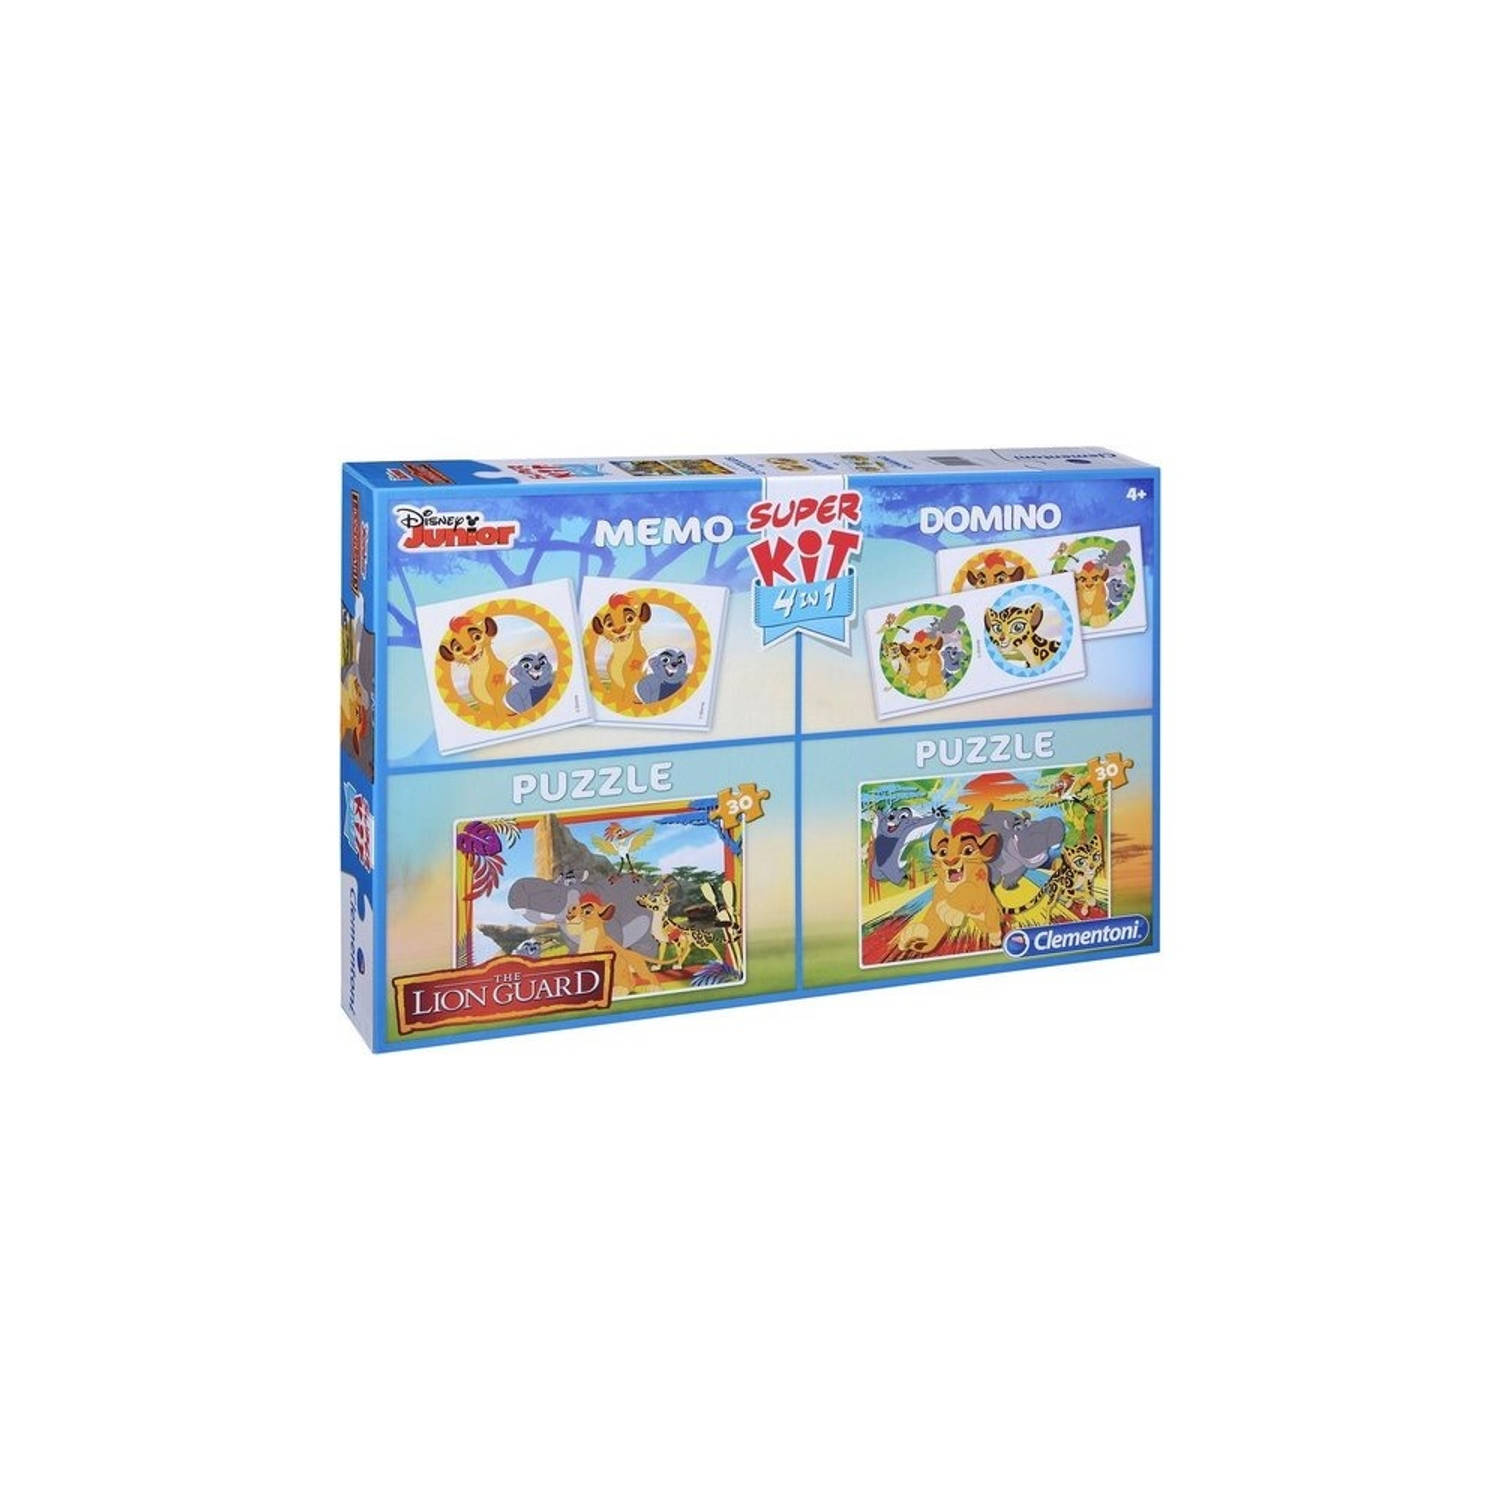 Disney Super Kit 4-in-1, The Lion King, puzzel, memory en dominospel.